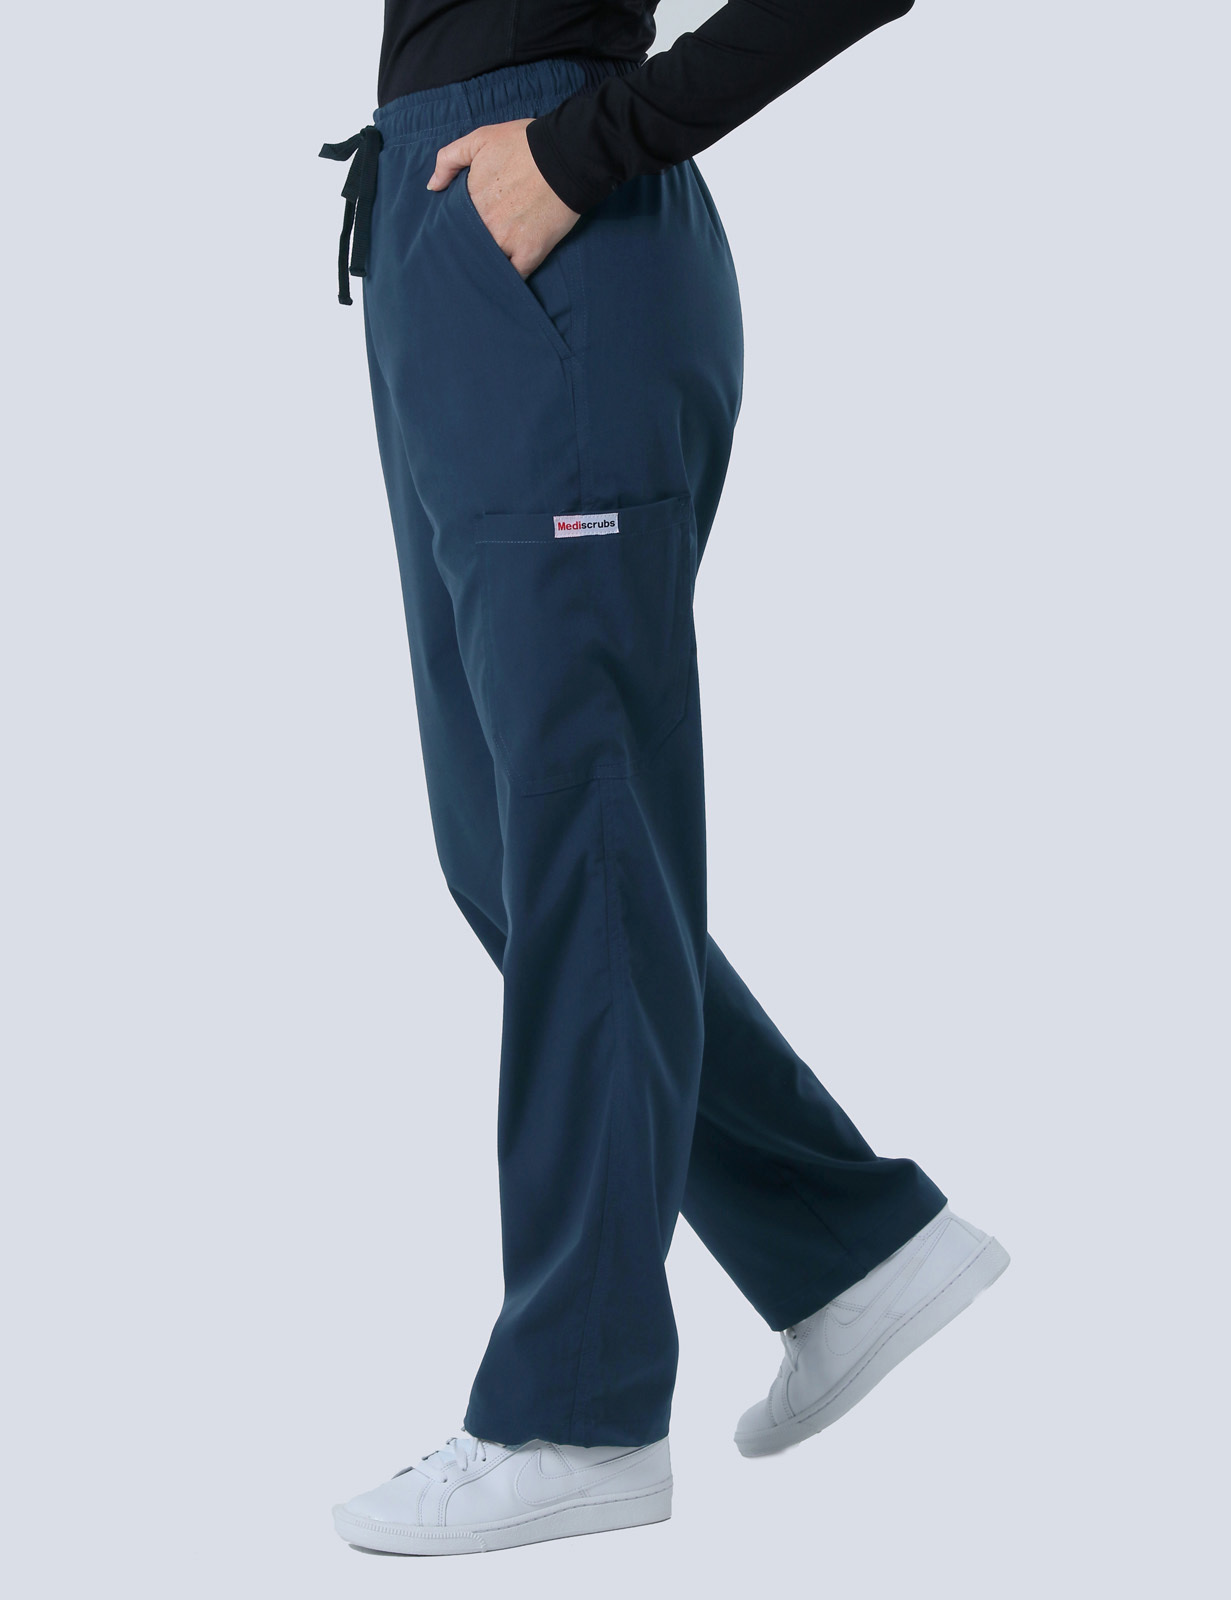 Rockhampton Hospital Emergency Department Enrolled Nurse Uniform Set Bundle (Women's Fit Solid Top and Cargo Pants in Navy + 3 Logos)